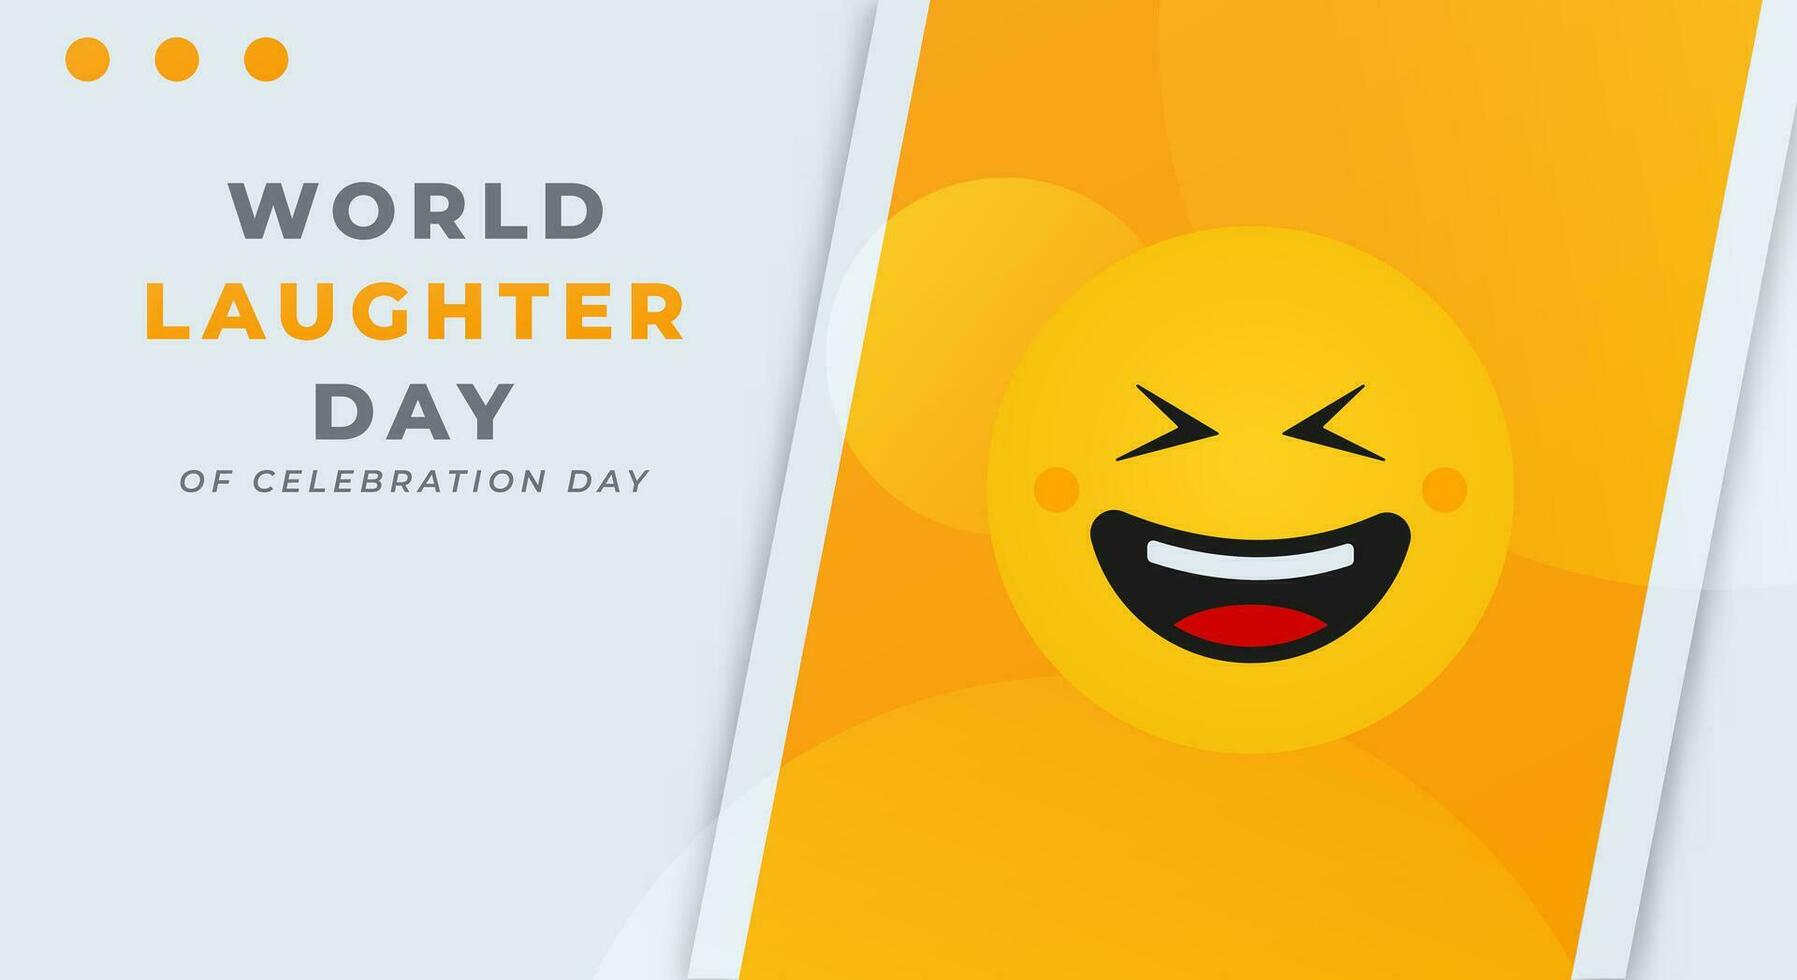 World Laughter Day Celebration Vector Design Illustration for Background, Poster, Banner, Advertising, Greeting Card